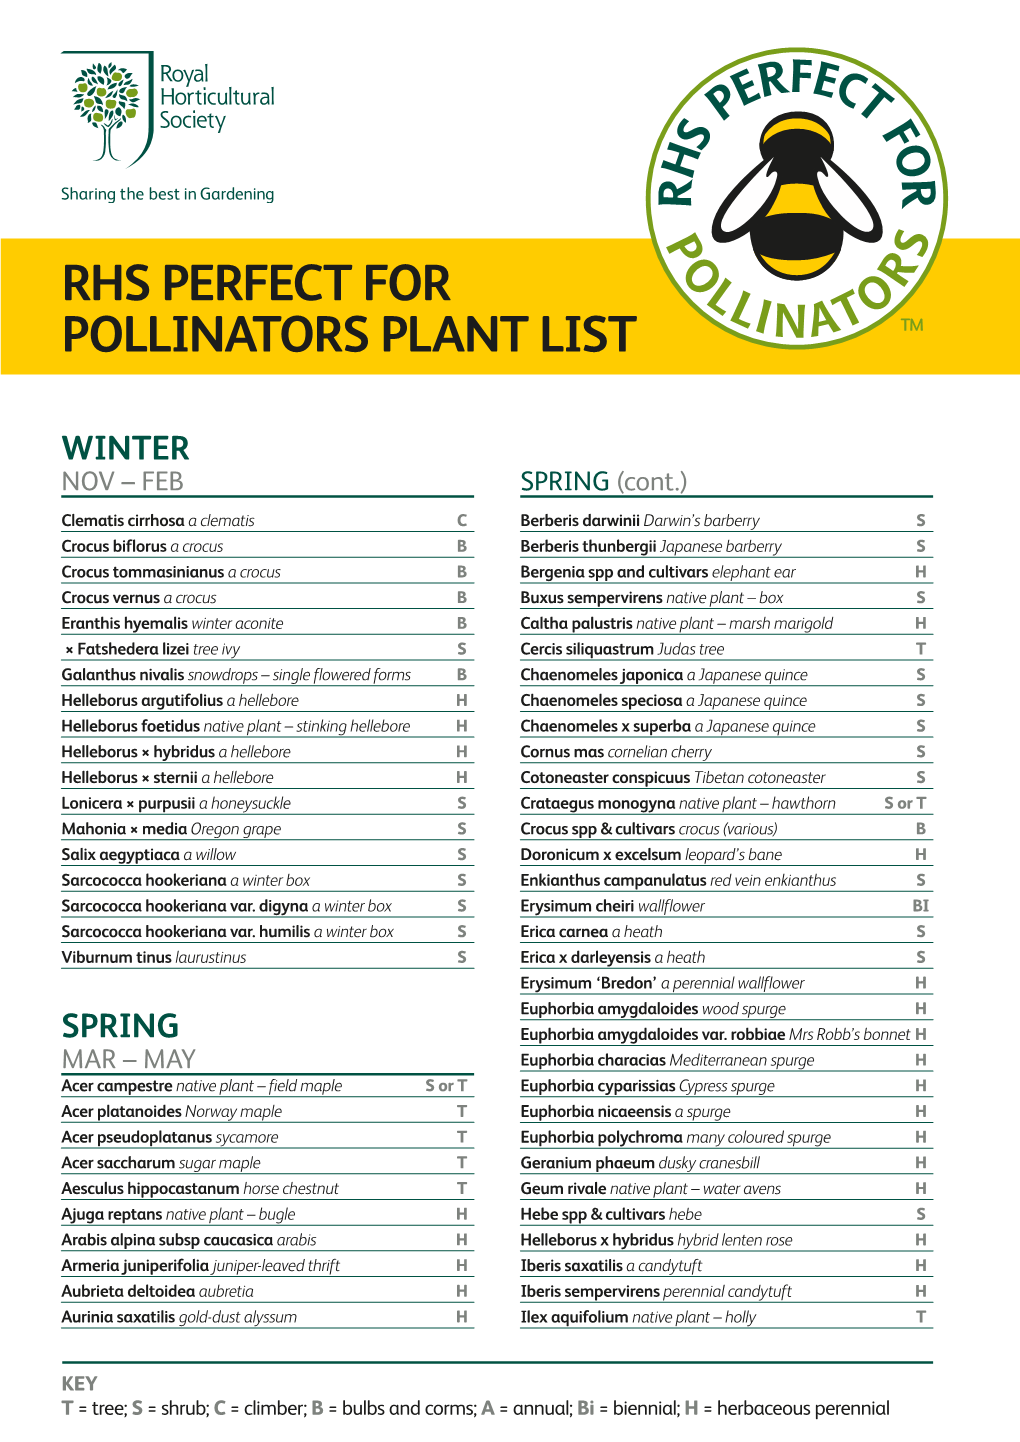 RHS Perfect for Pollinators Plant List